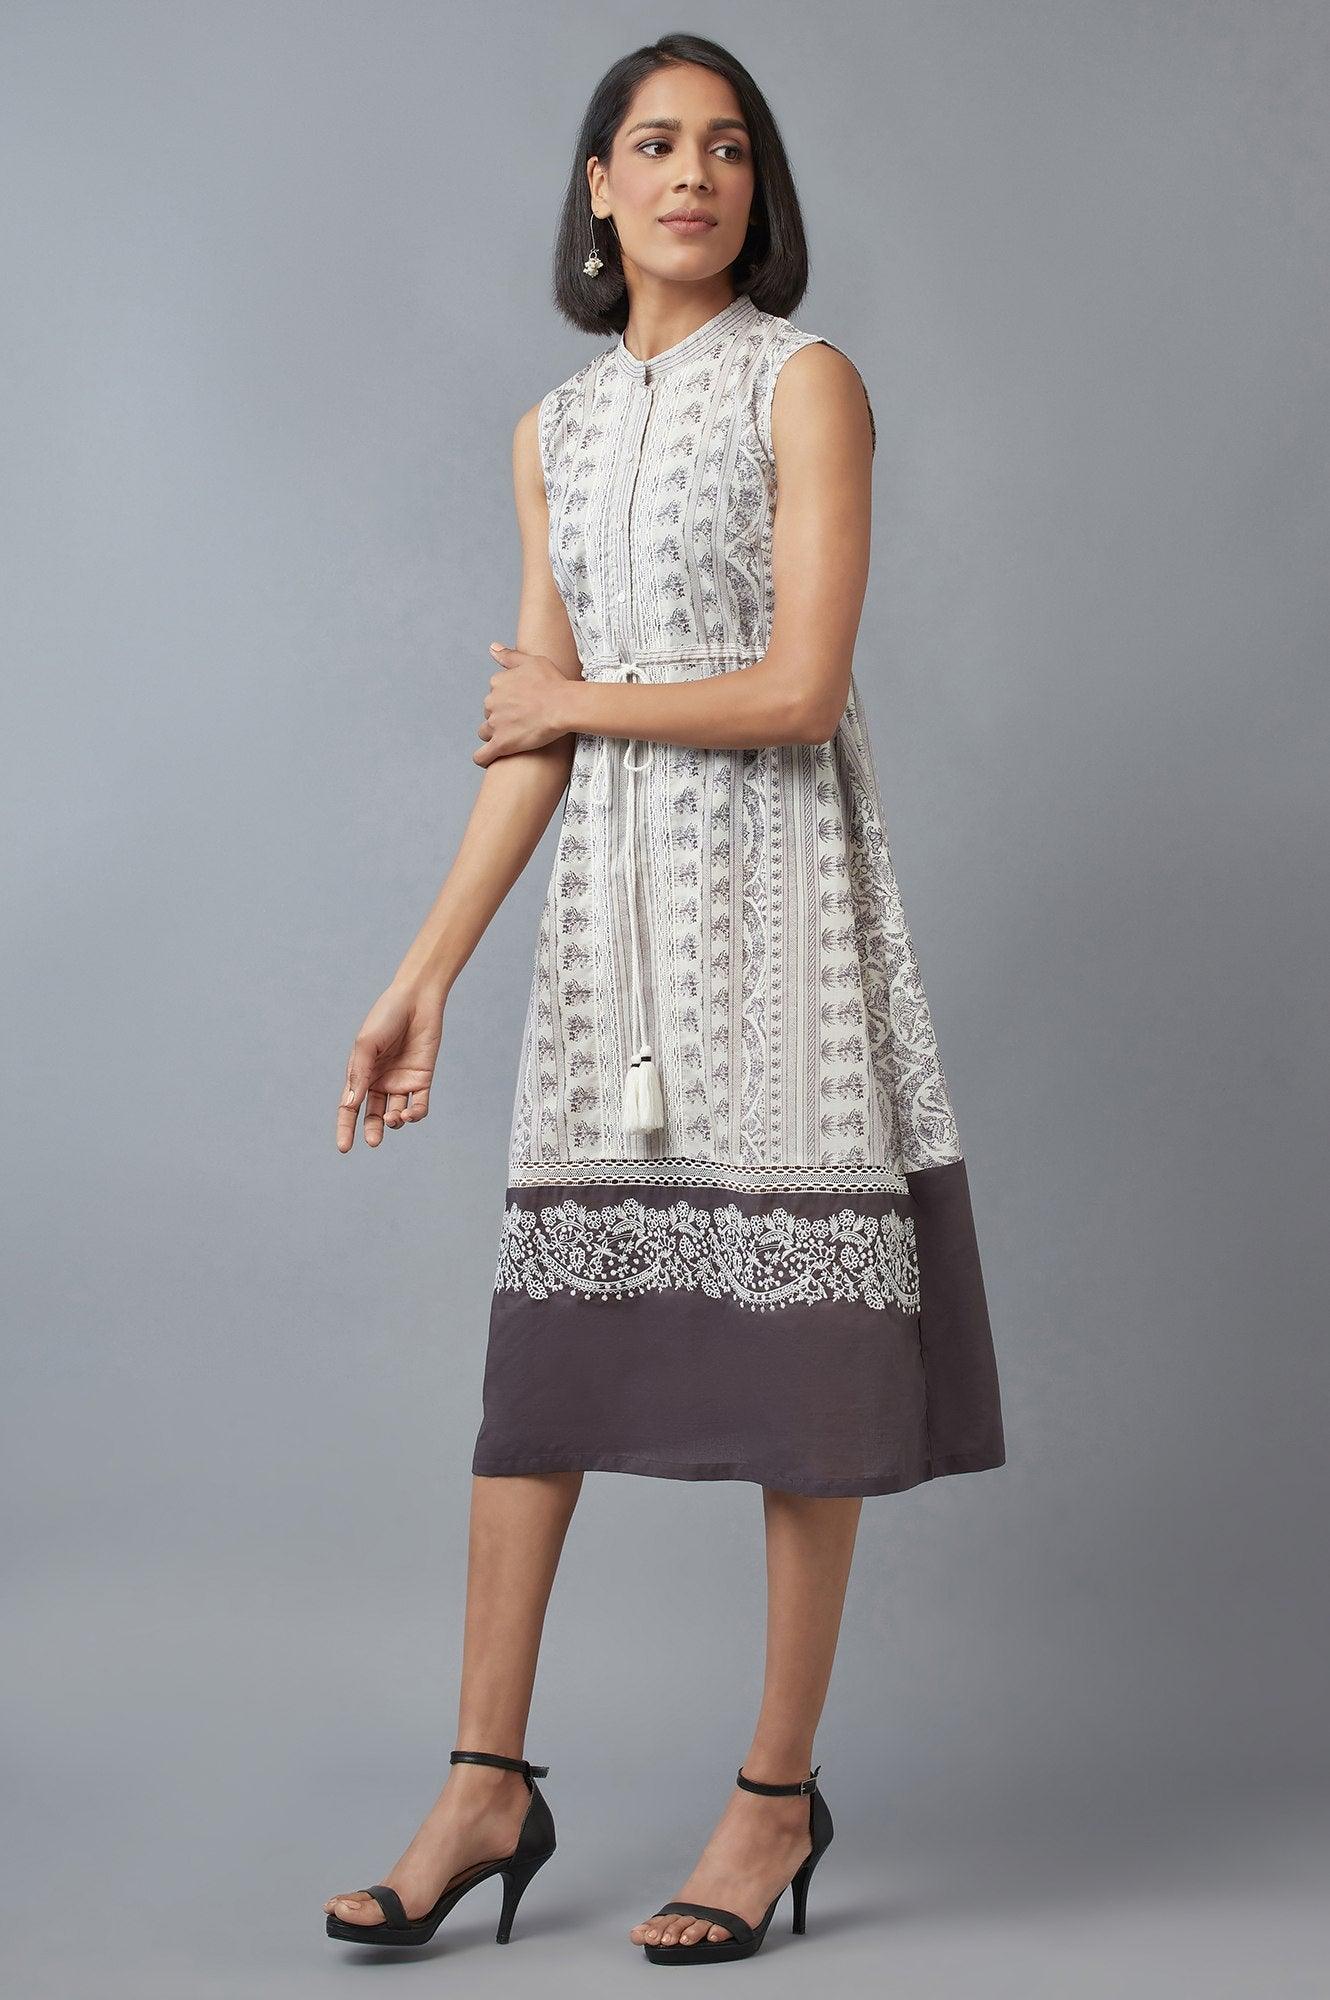 Prestine White and Opal Grey Printed Dress - wforwoman